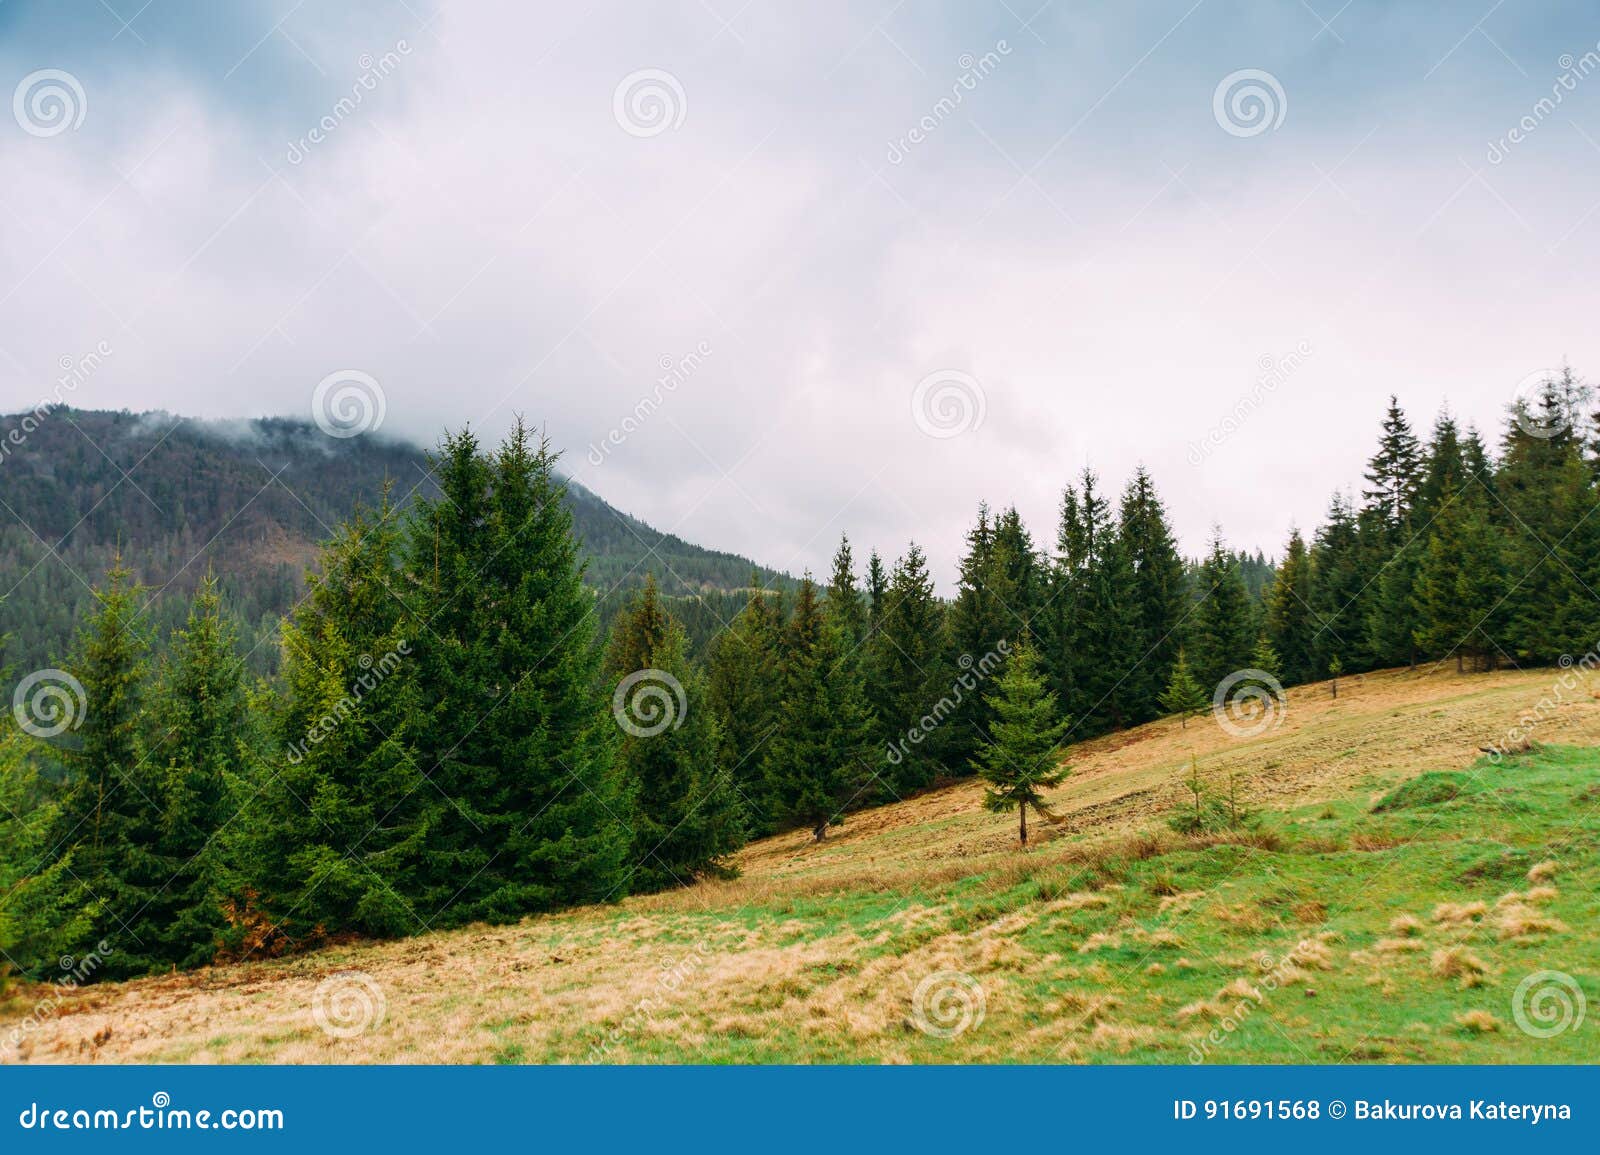 carpathian mountains. landscape with firs. ukrai